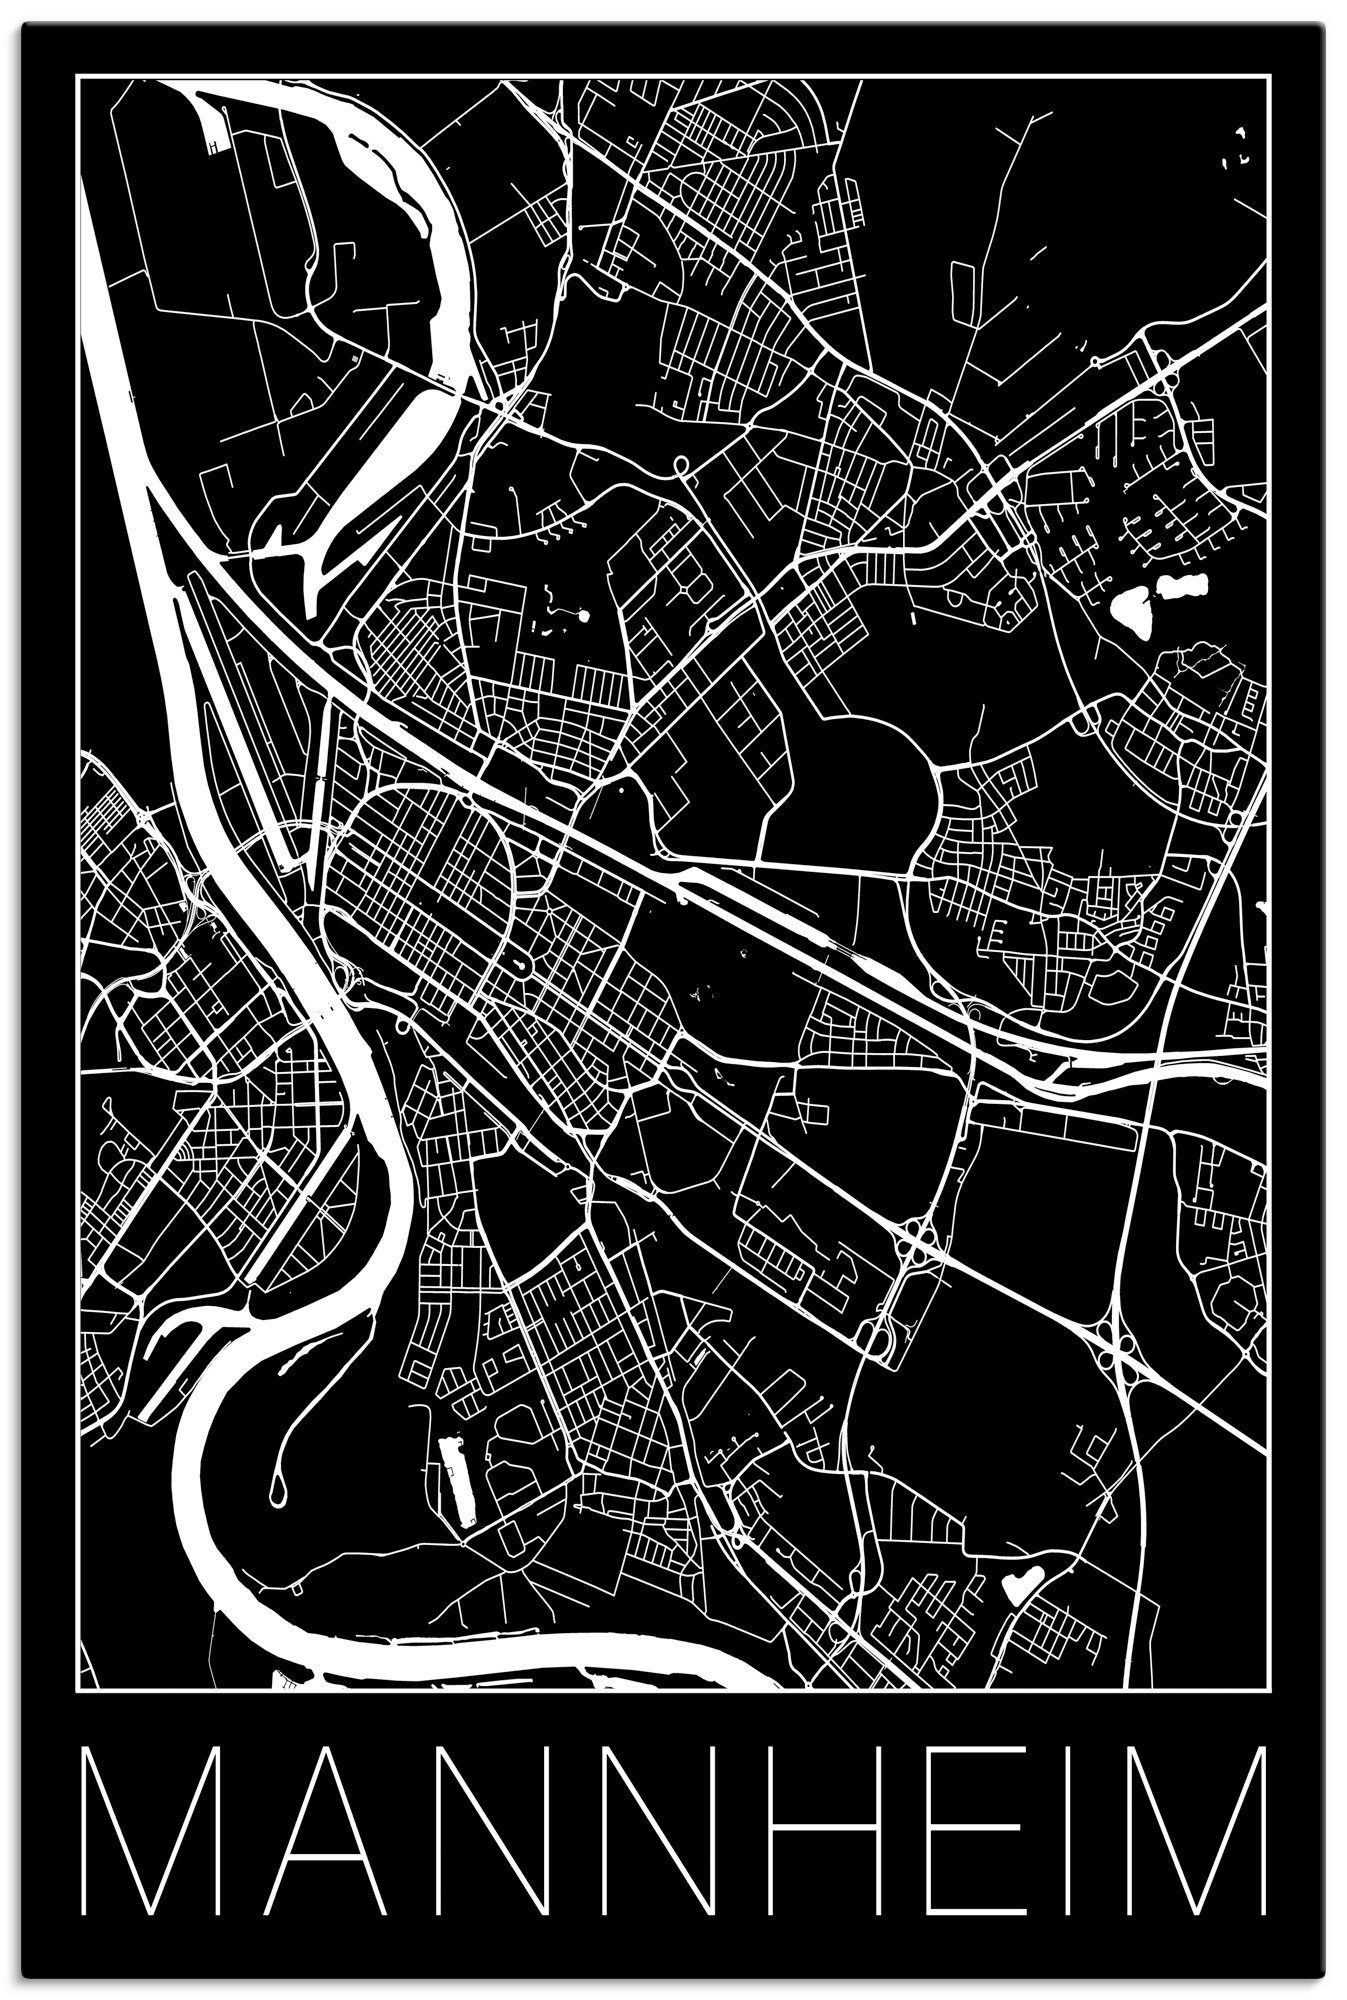 Artland Artprint Retro kaart Mannheim Duitsland zwart in vele afmetingen & productsoorten - artprint van aluminium / artprint voor buiten, artprint op linnen, poster, muursticker /